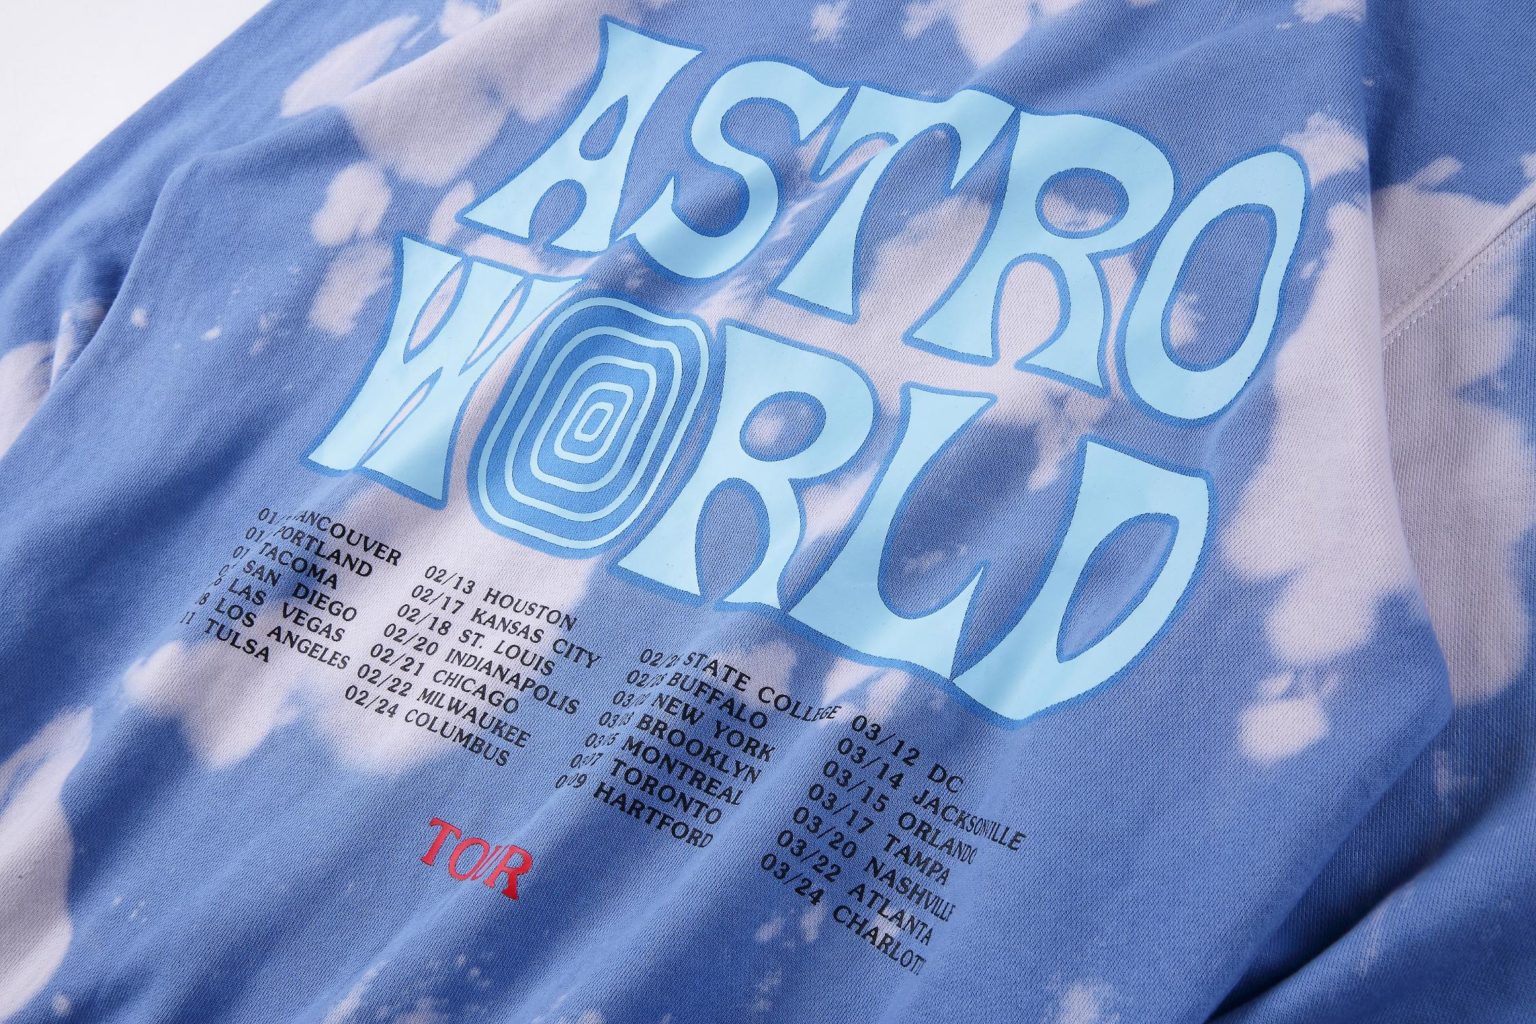 astroworld 2001 prime edition